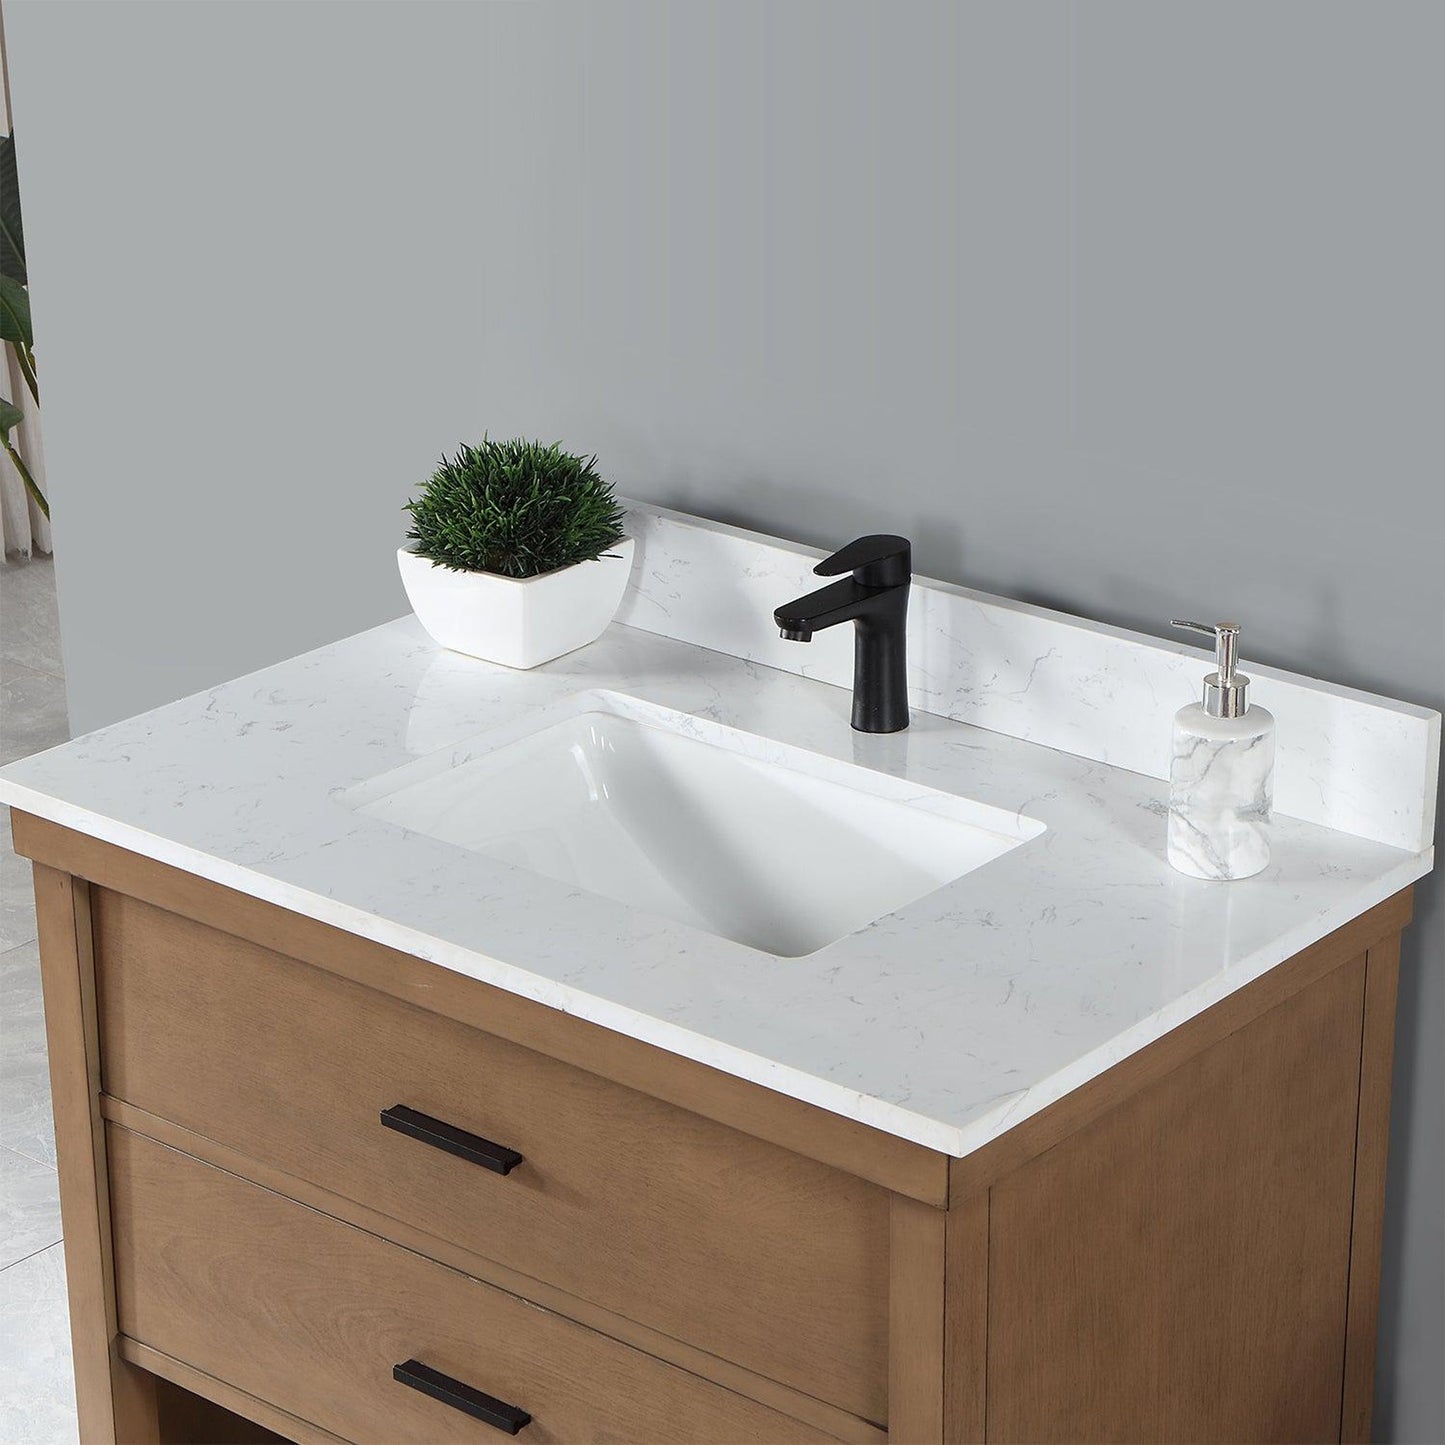 Altair Kesia 36" Brown Pine Freestanding Single Bathroom Vanity Set With Stylish Aosta White Composite Stone Top, Rectangular Undermount Ceramic Sink, Overflow, and Backsplash